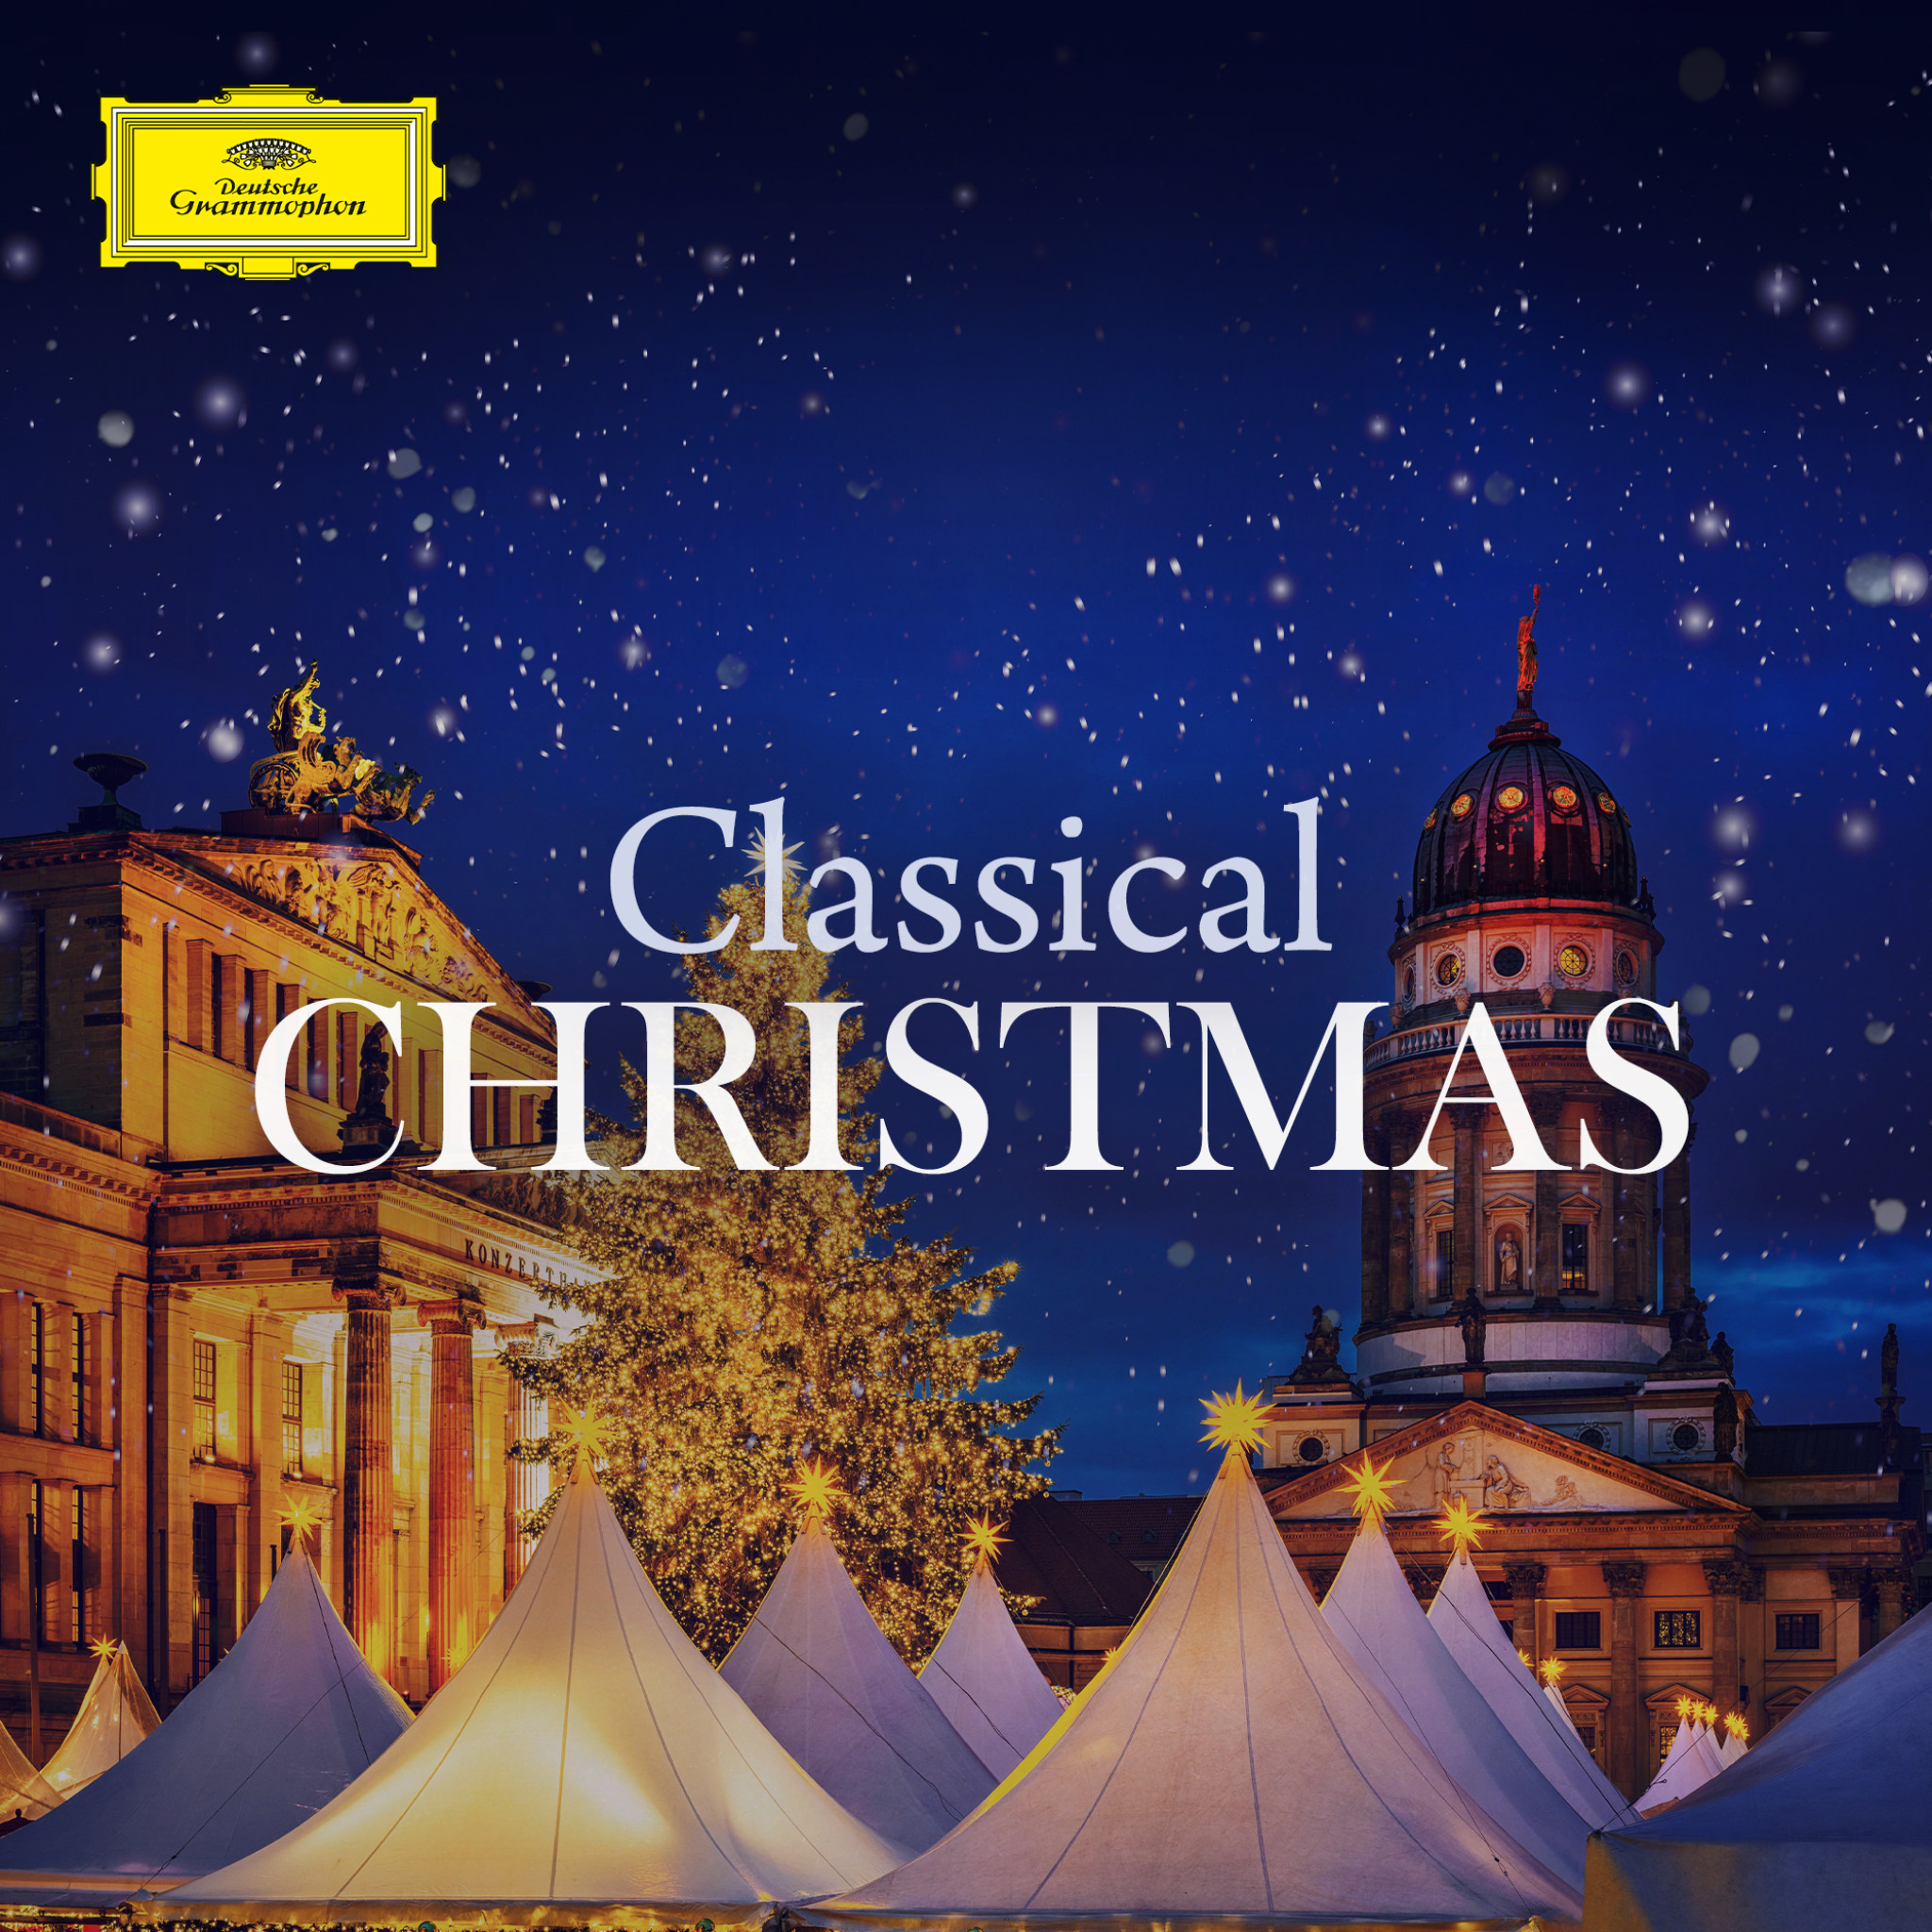 Classical Christmas Playlist Cover V2